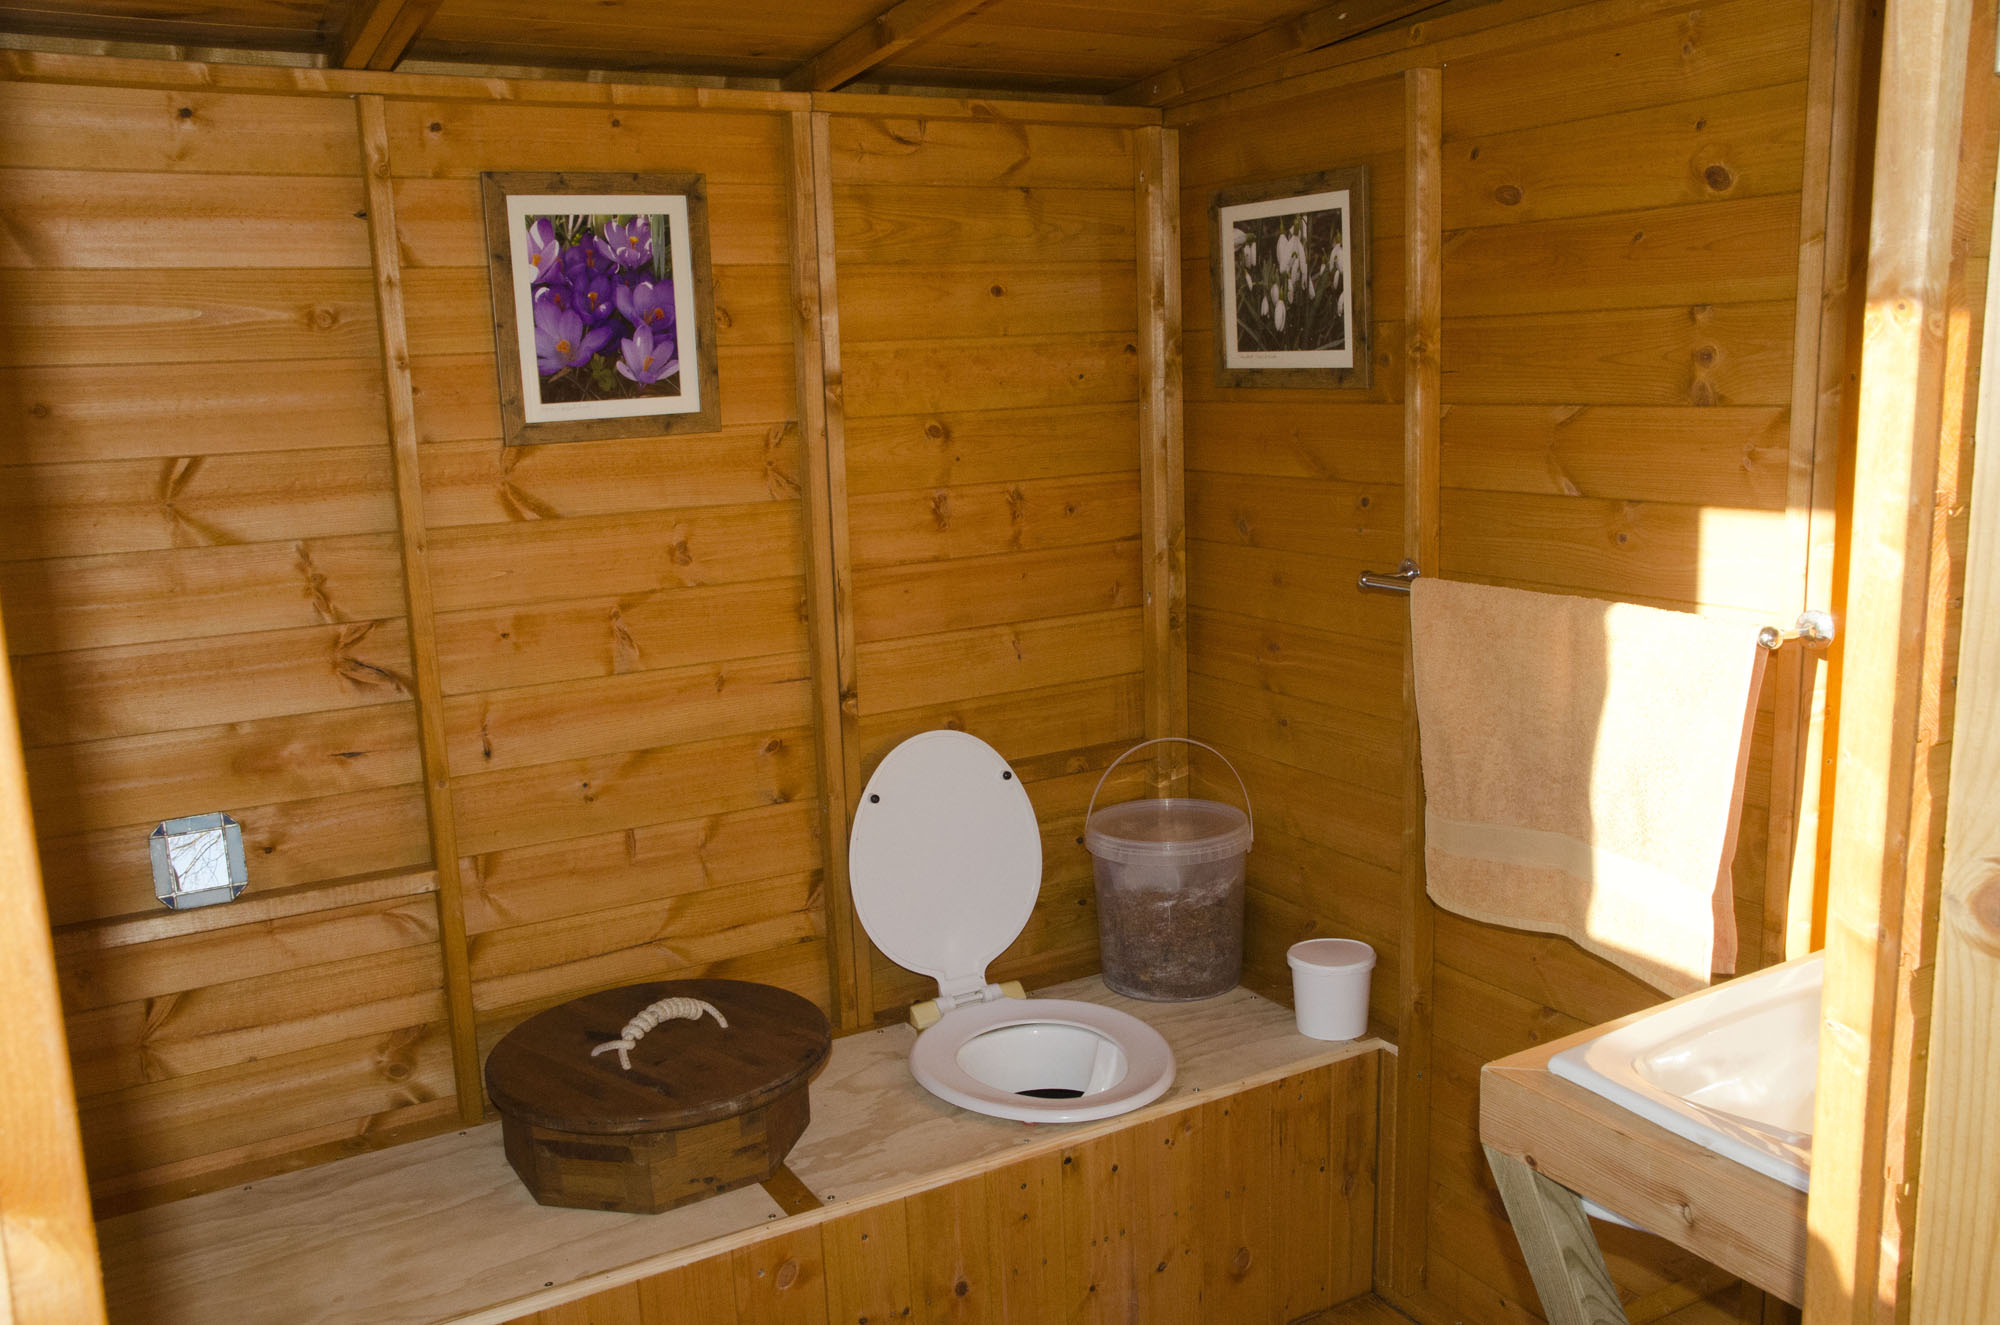 Aranya's compost toilet inside